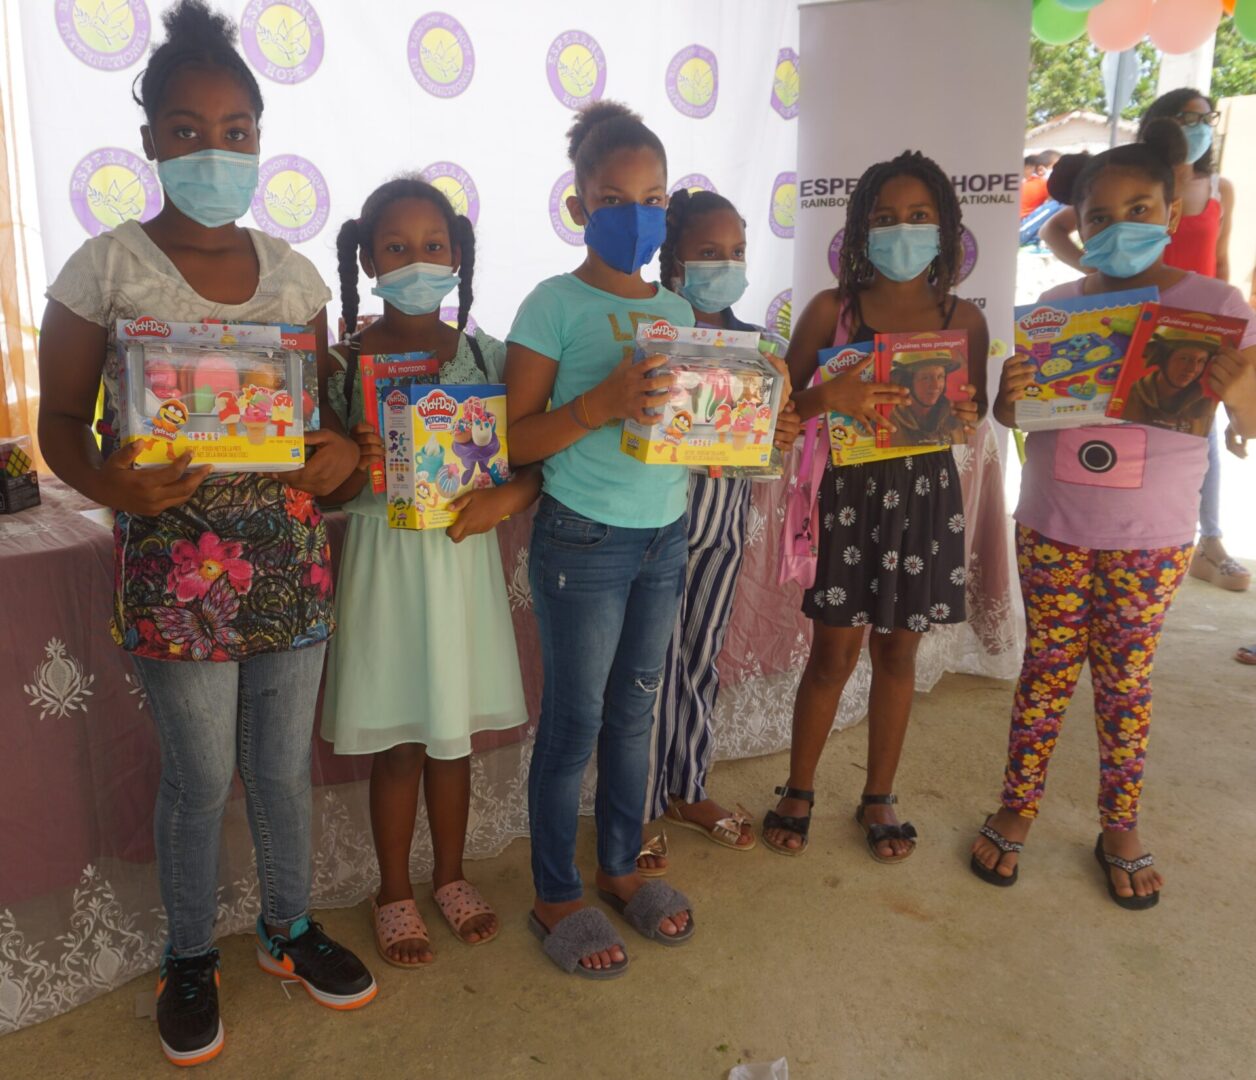 Six girls holding toys, the cloth with Esperanza-Hope logo behind them, batch 2